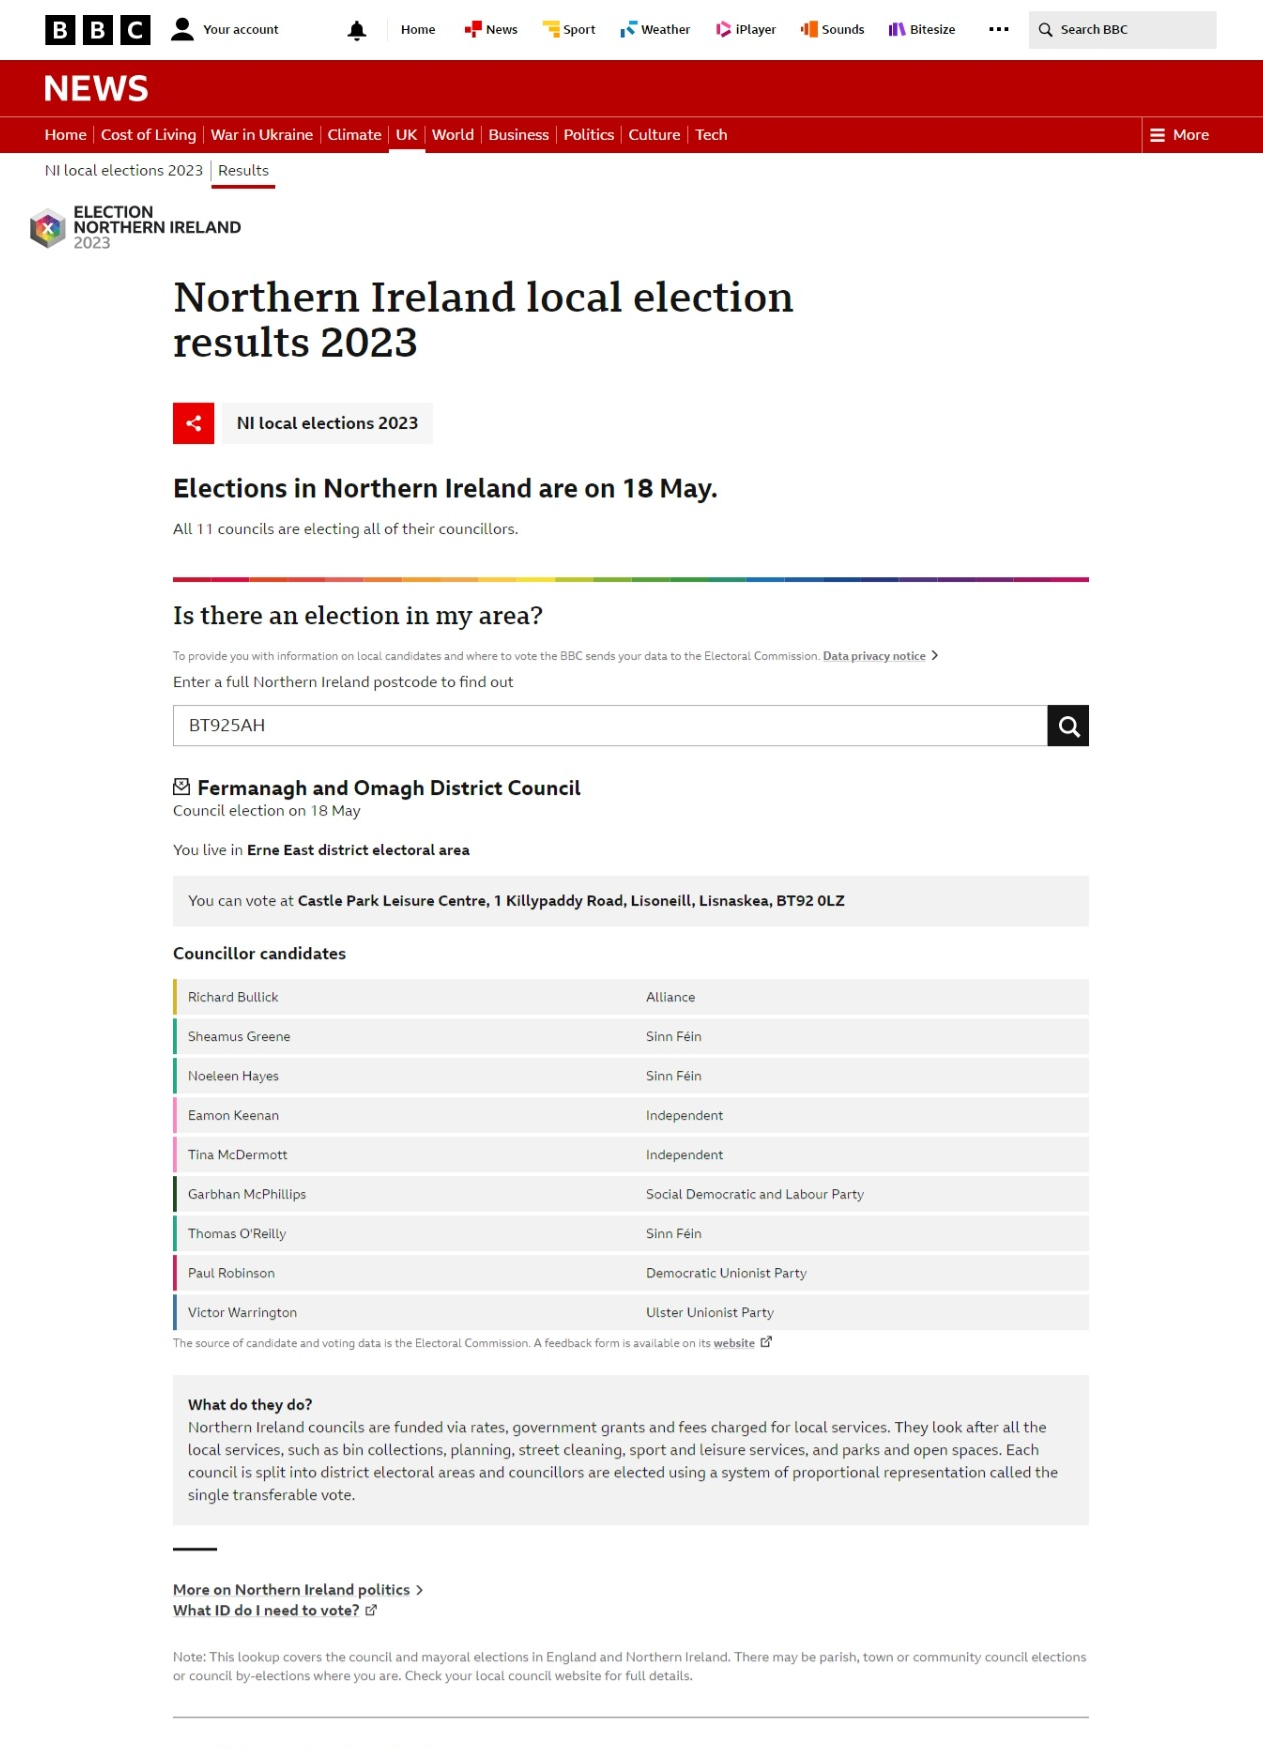 BBC Northern Ireland election lookup